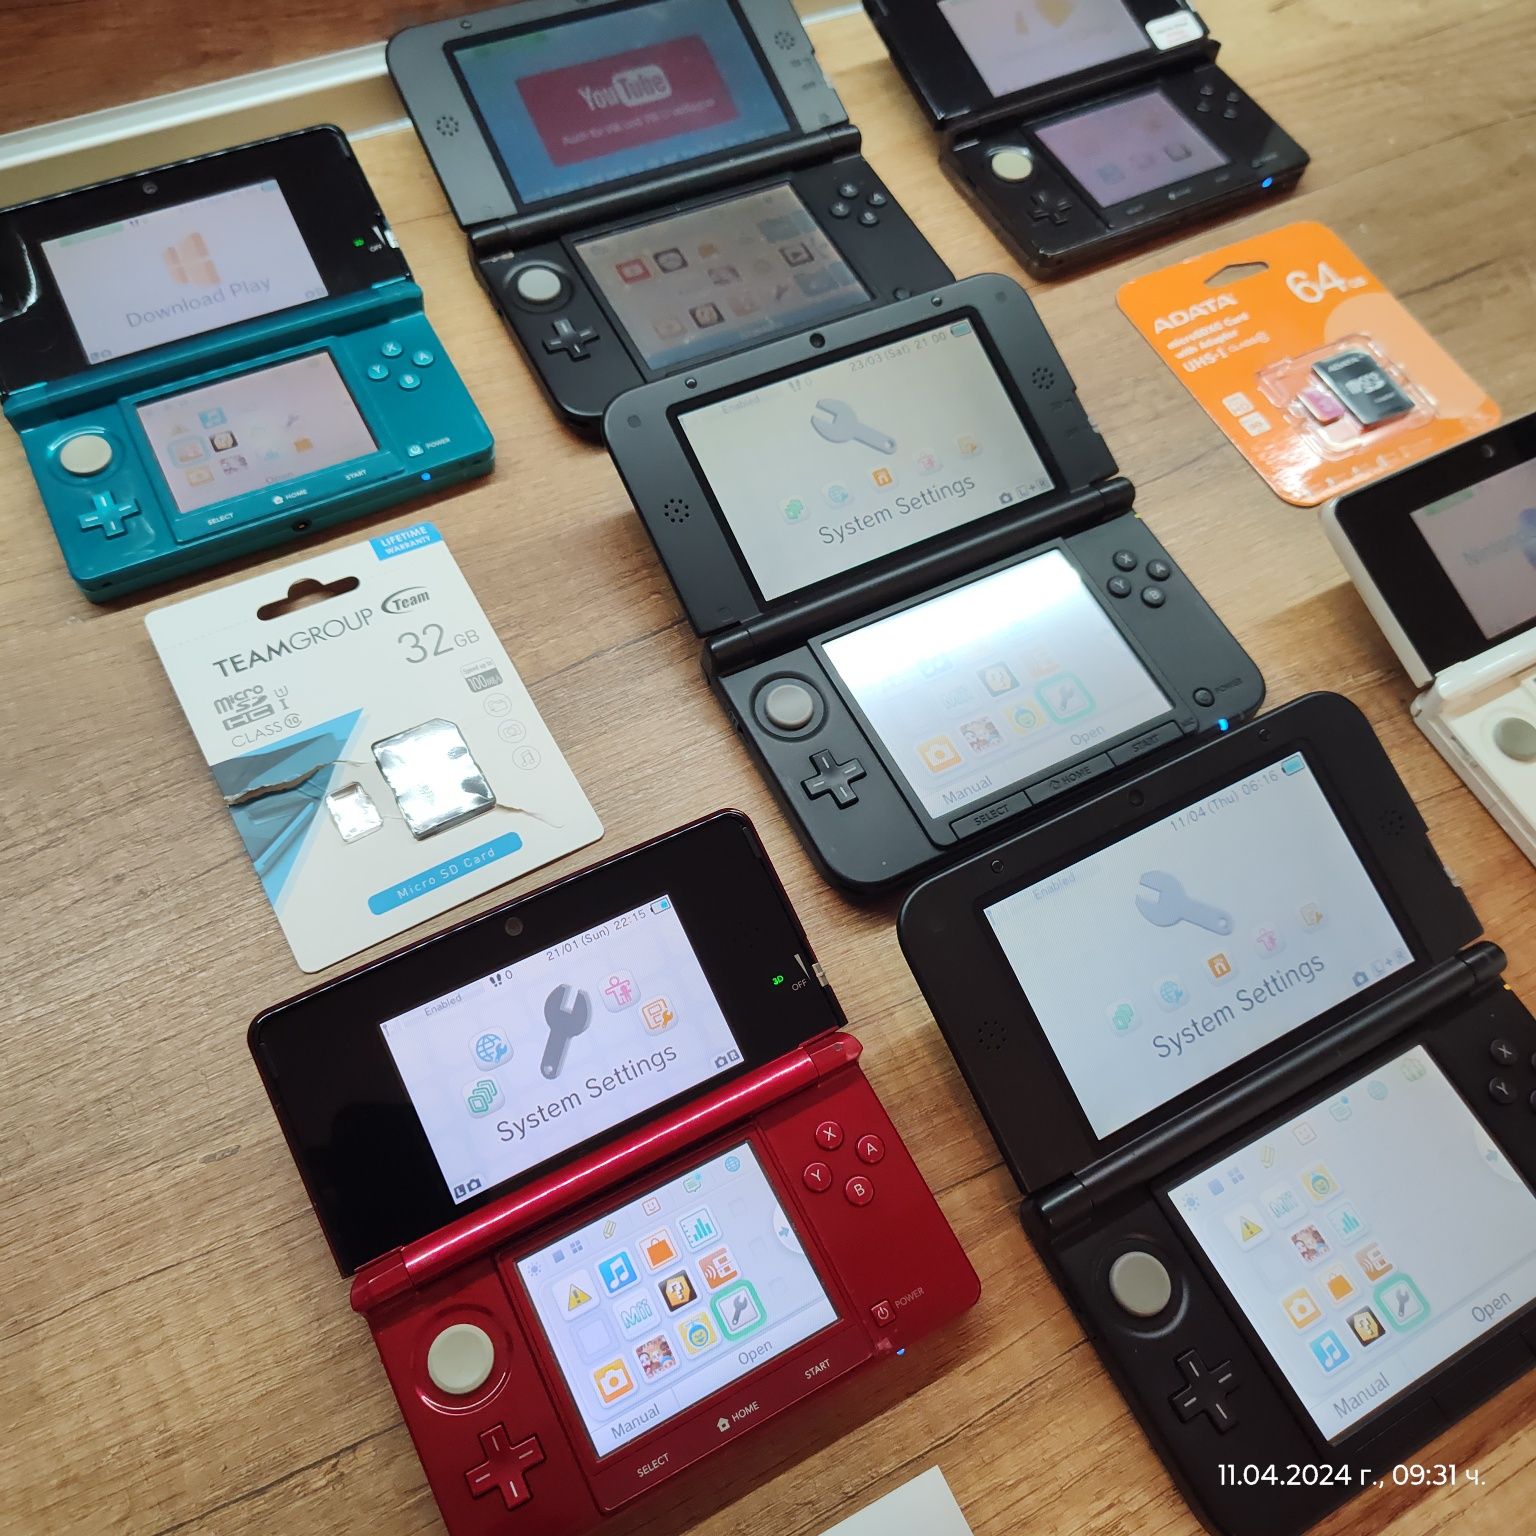 Nintendo 3DS и 3DS XL Luma